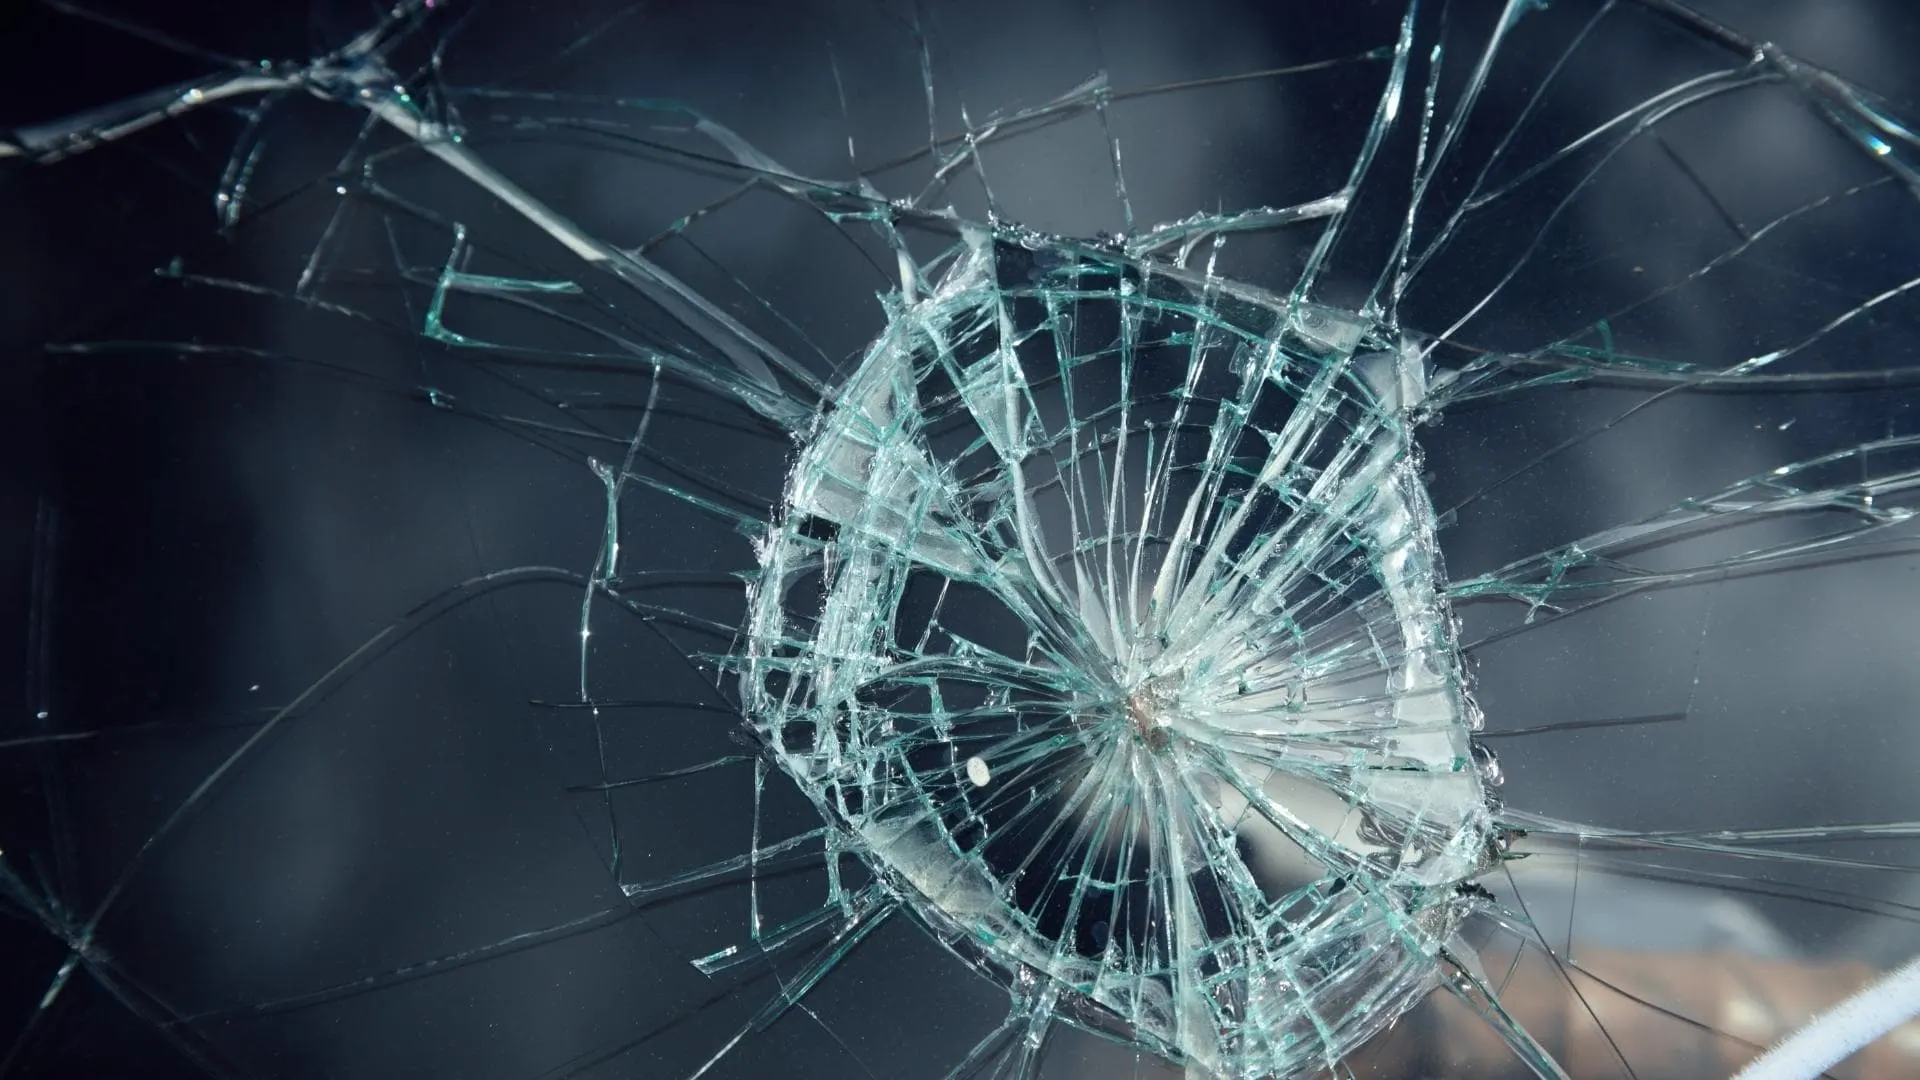 Photo of a badly damaged windshield